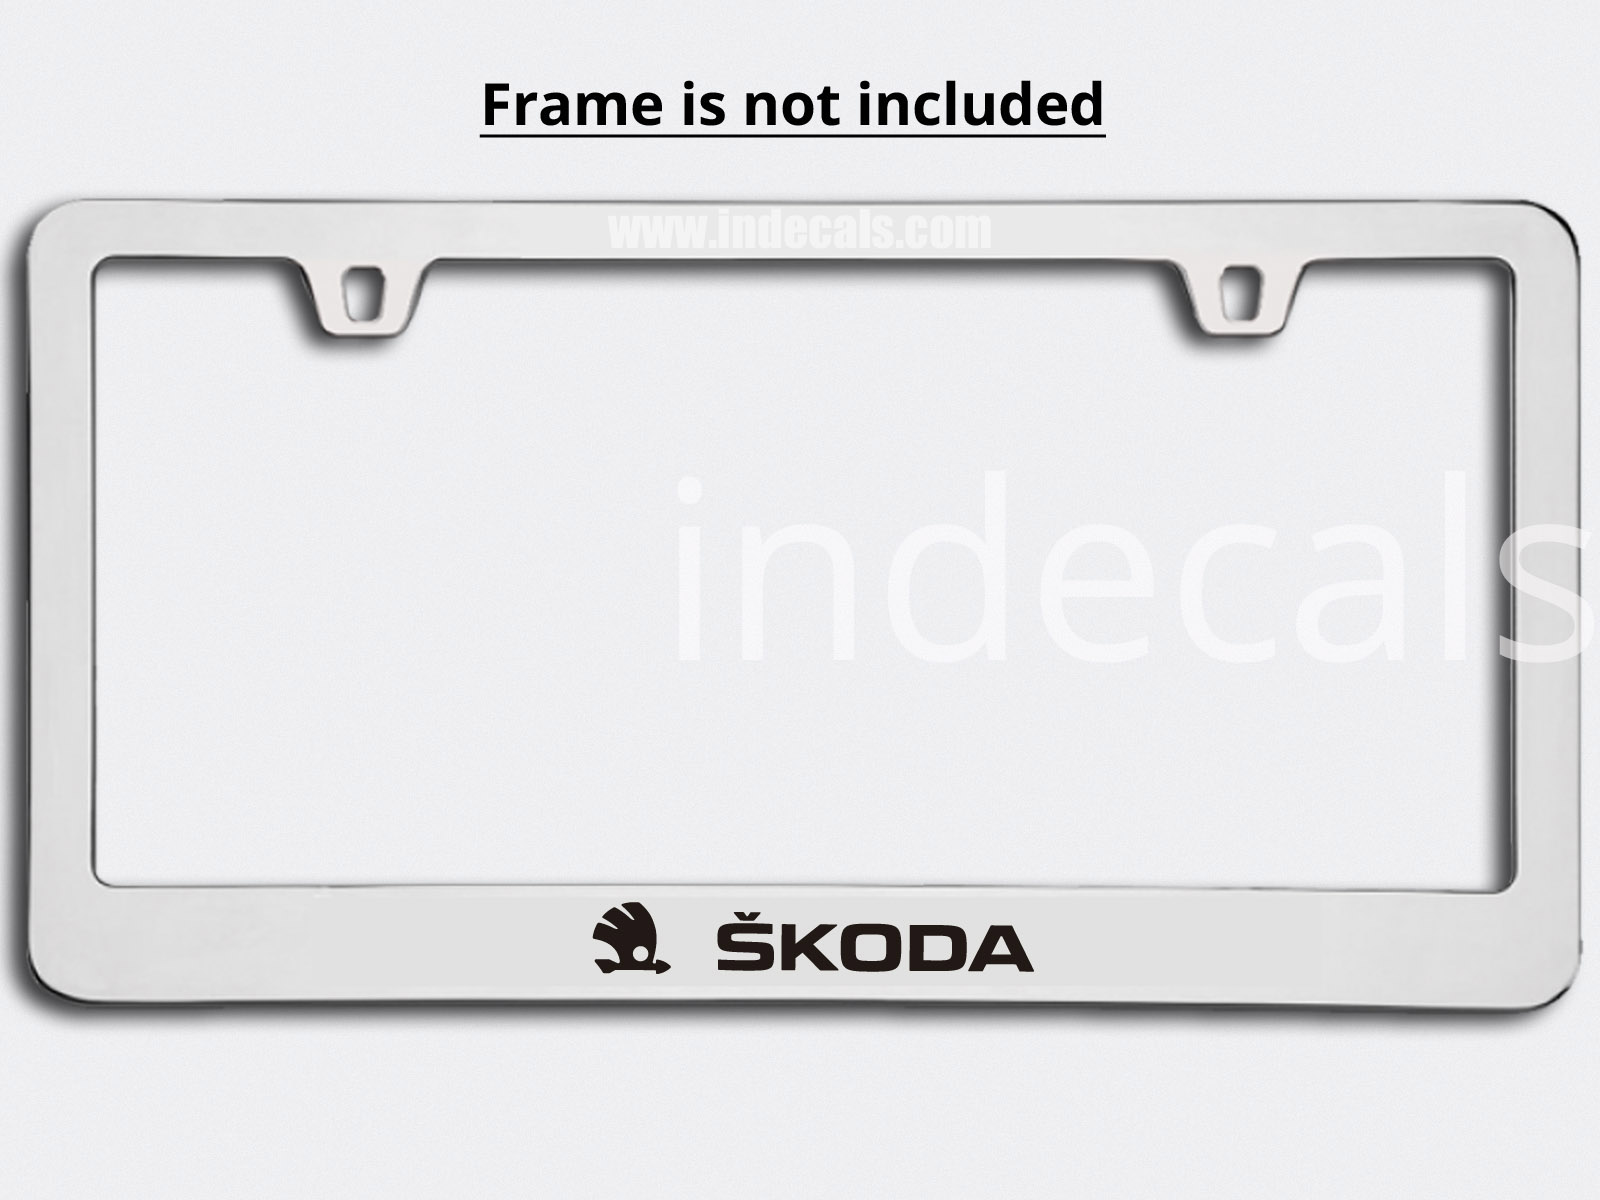 3 x Skoda Stickers for Plate Frame - Black